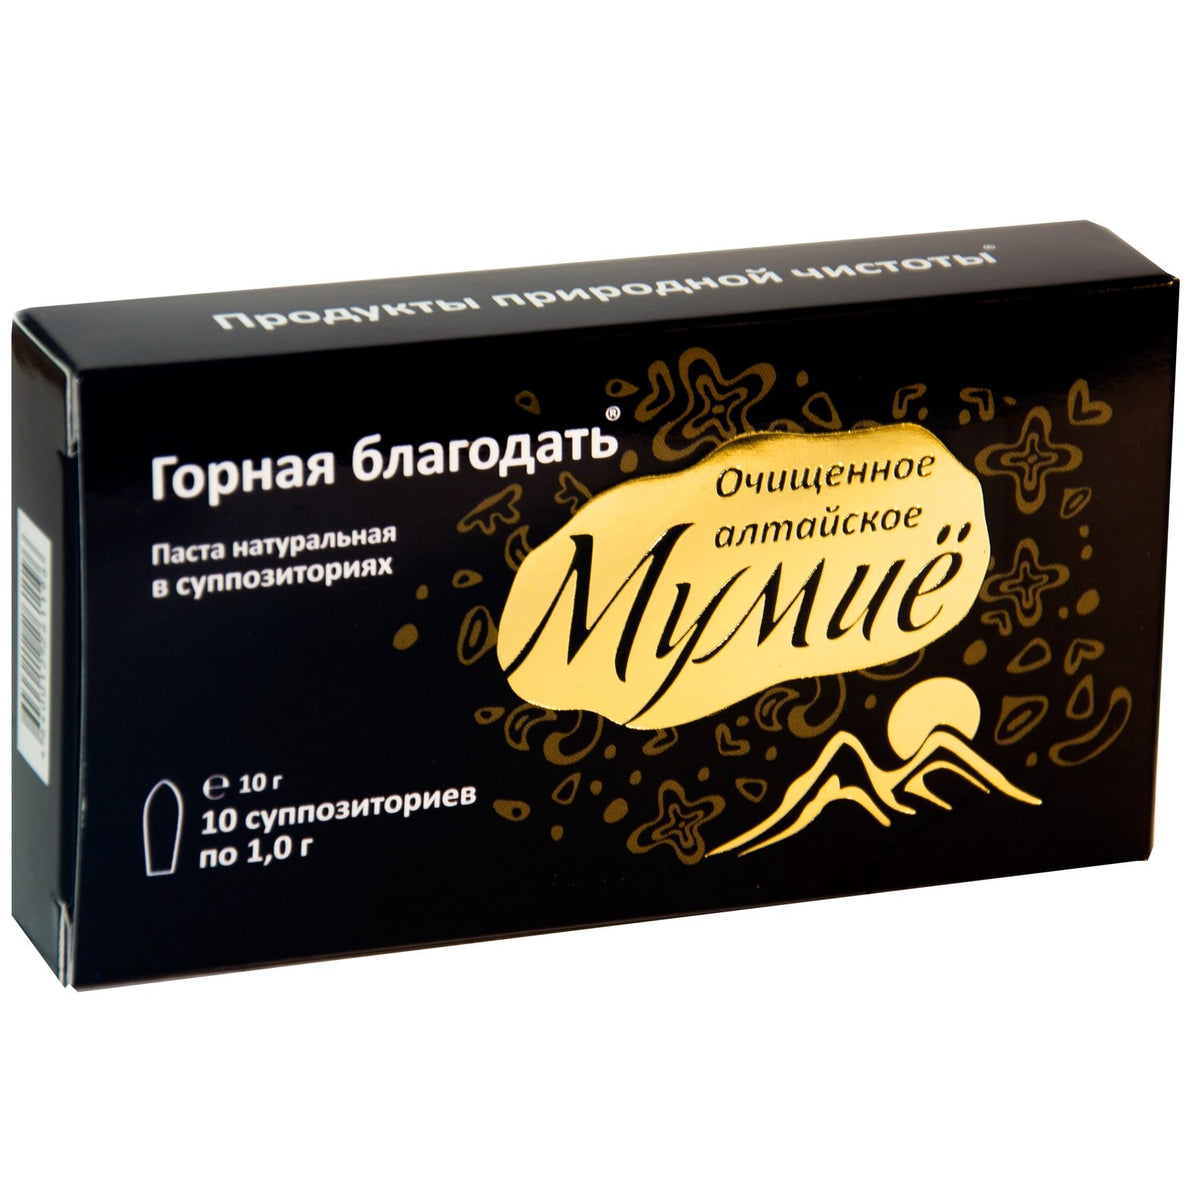 Pure Premium Shilajit Cream Balm ‘Mountain Grace’ Cylindrical Capsule Form 10 grams (10 units x 1 gram each)